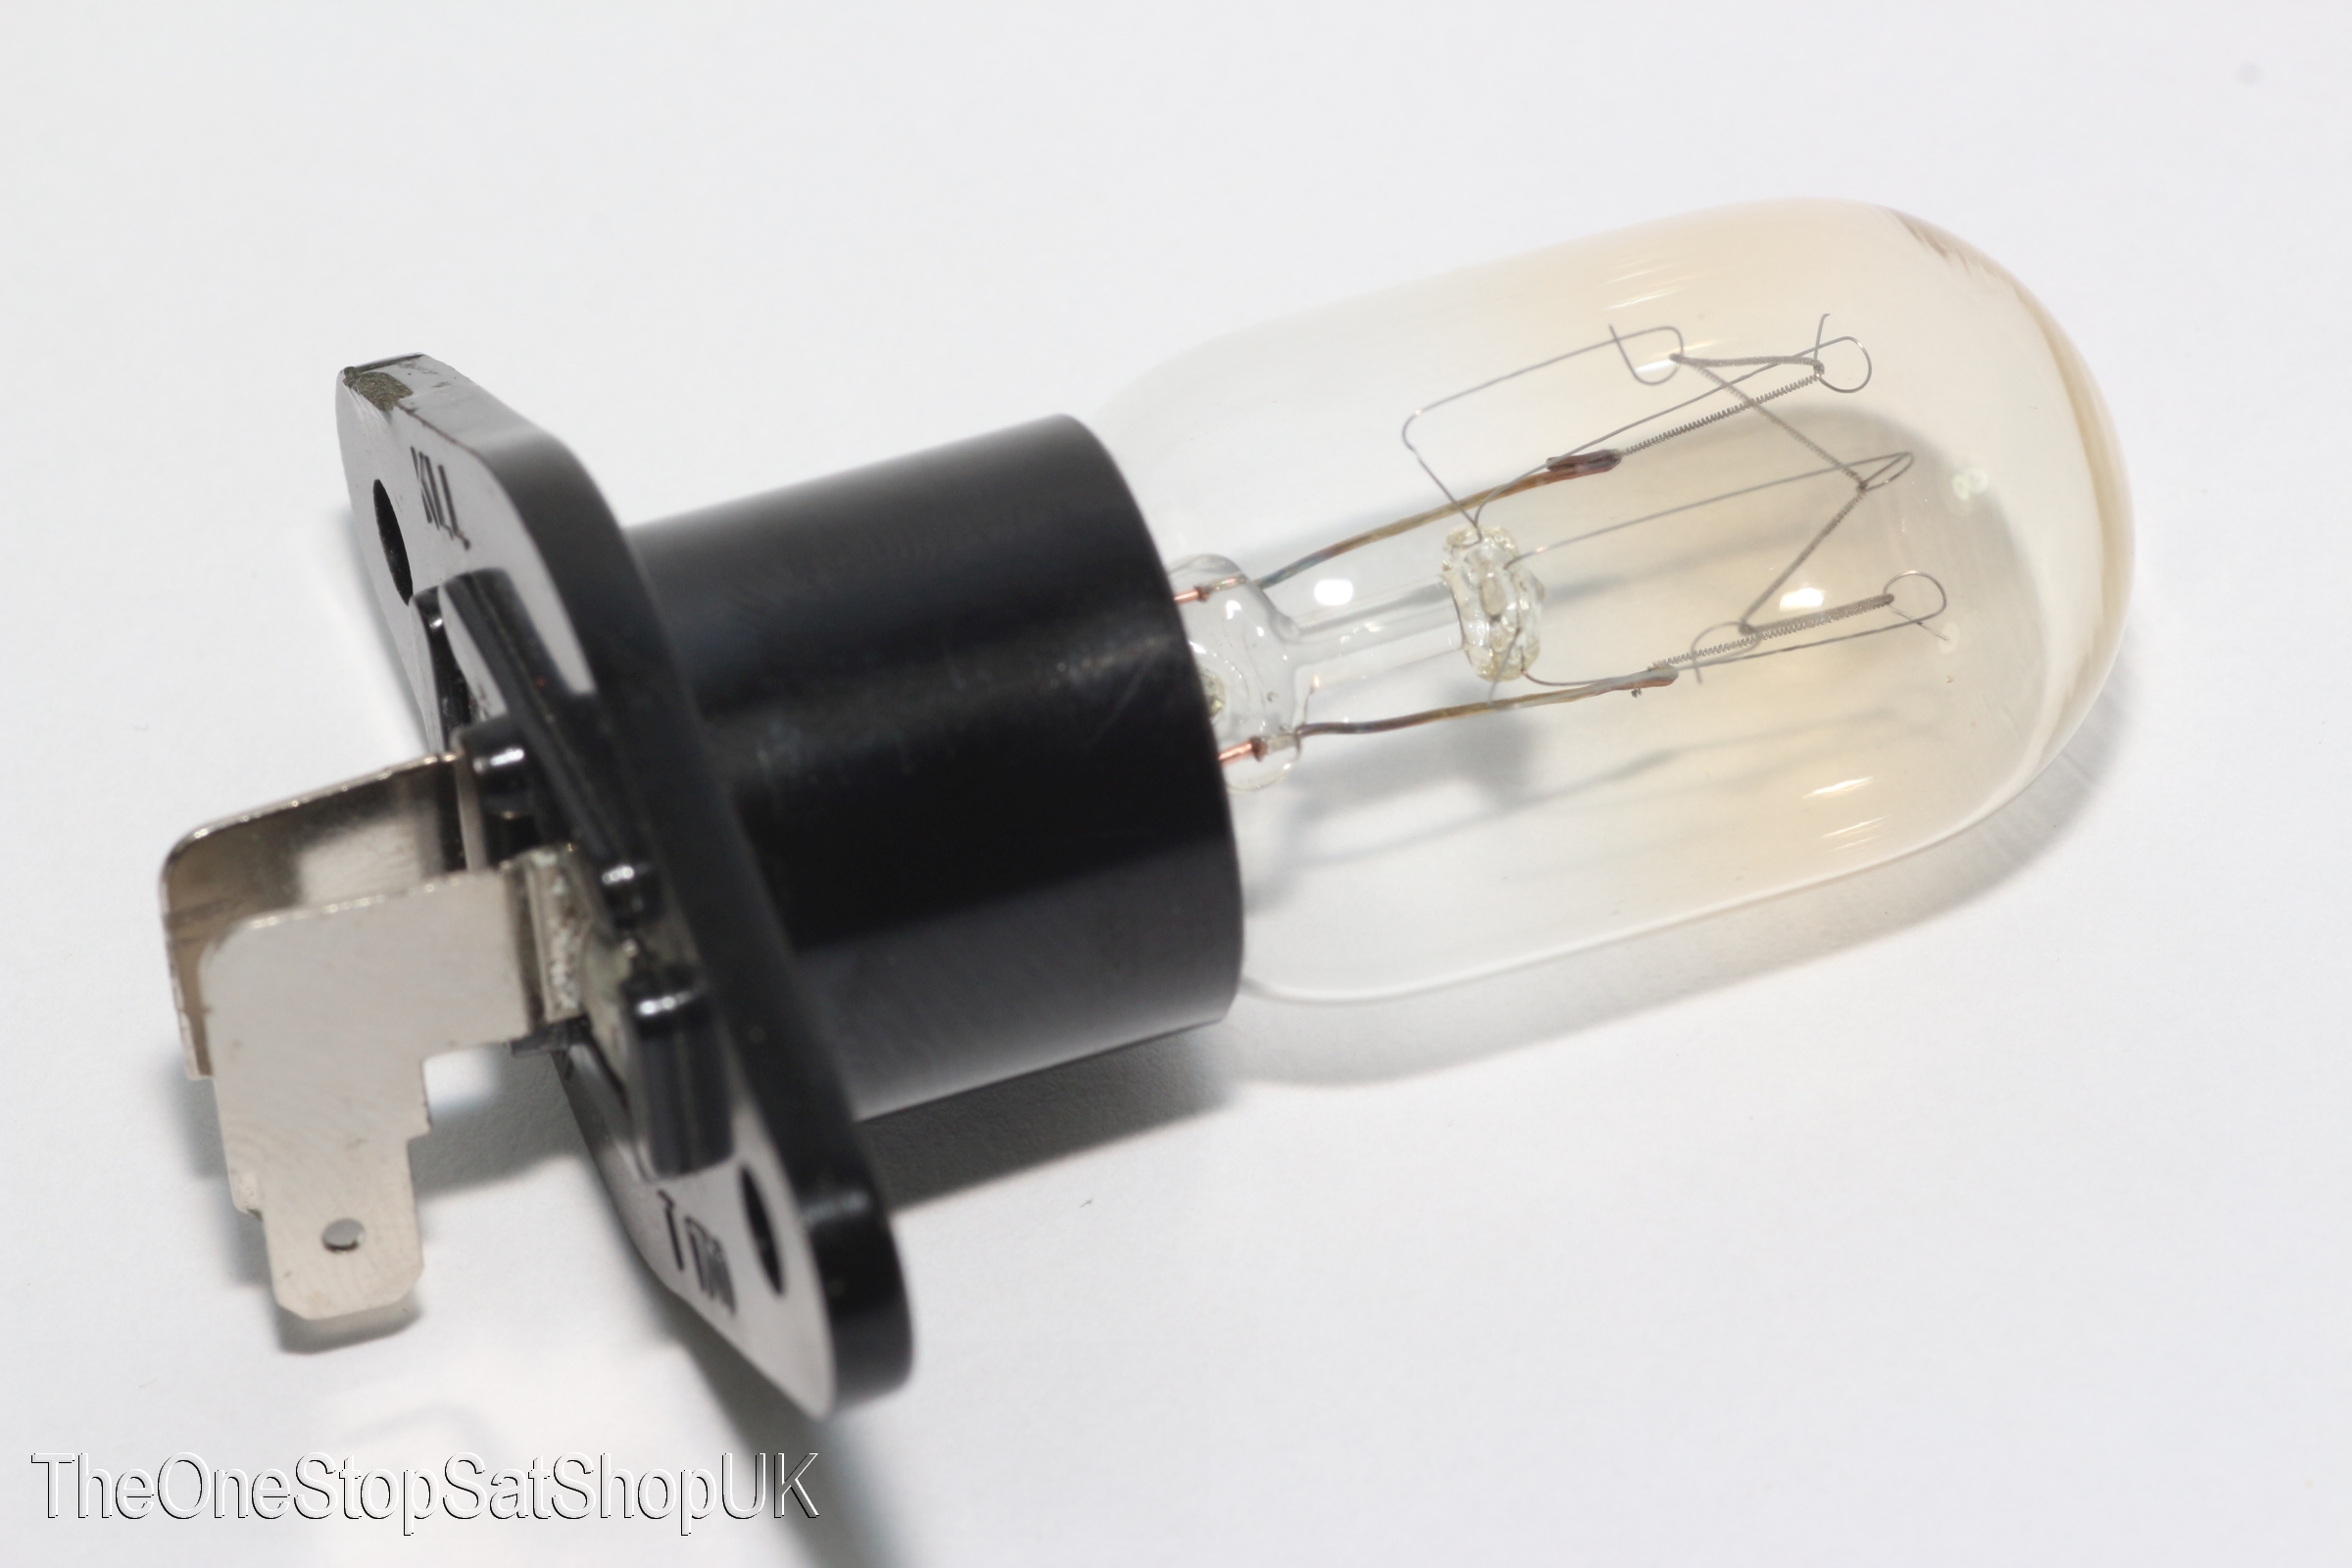 Лампа для свч. Лампочка для микроволновой печи 20w 230v t170. Лампочка для микроволновой печи 20w 250v t170. Лампочка для микроволновки самсунг. Лампочка для микроволновой печи самсунг re-1330.